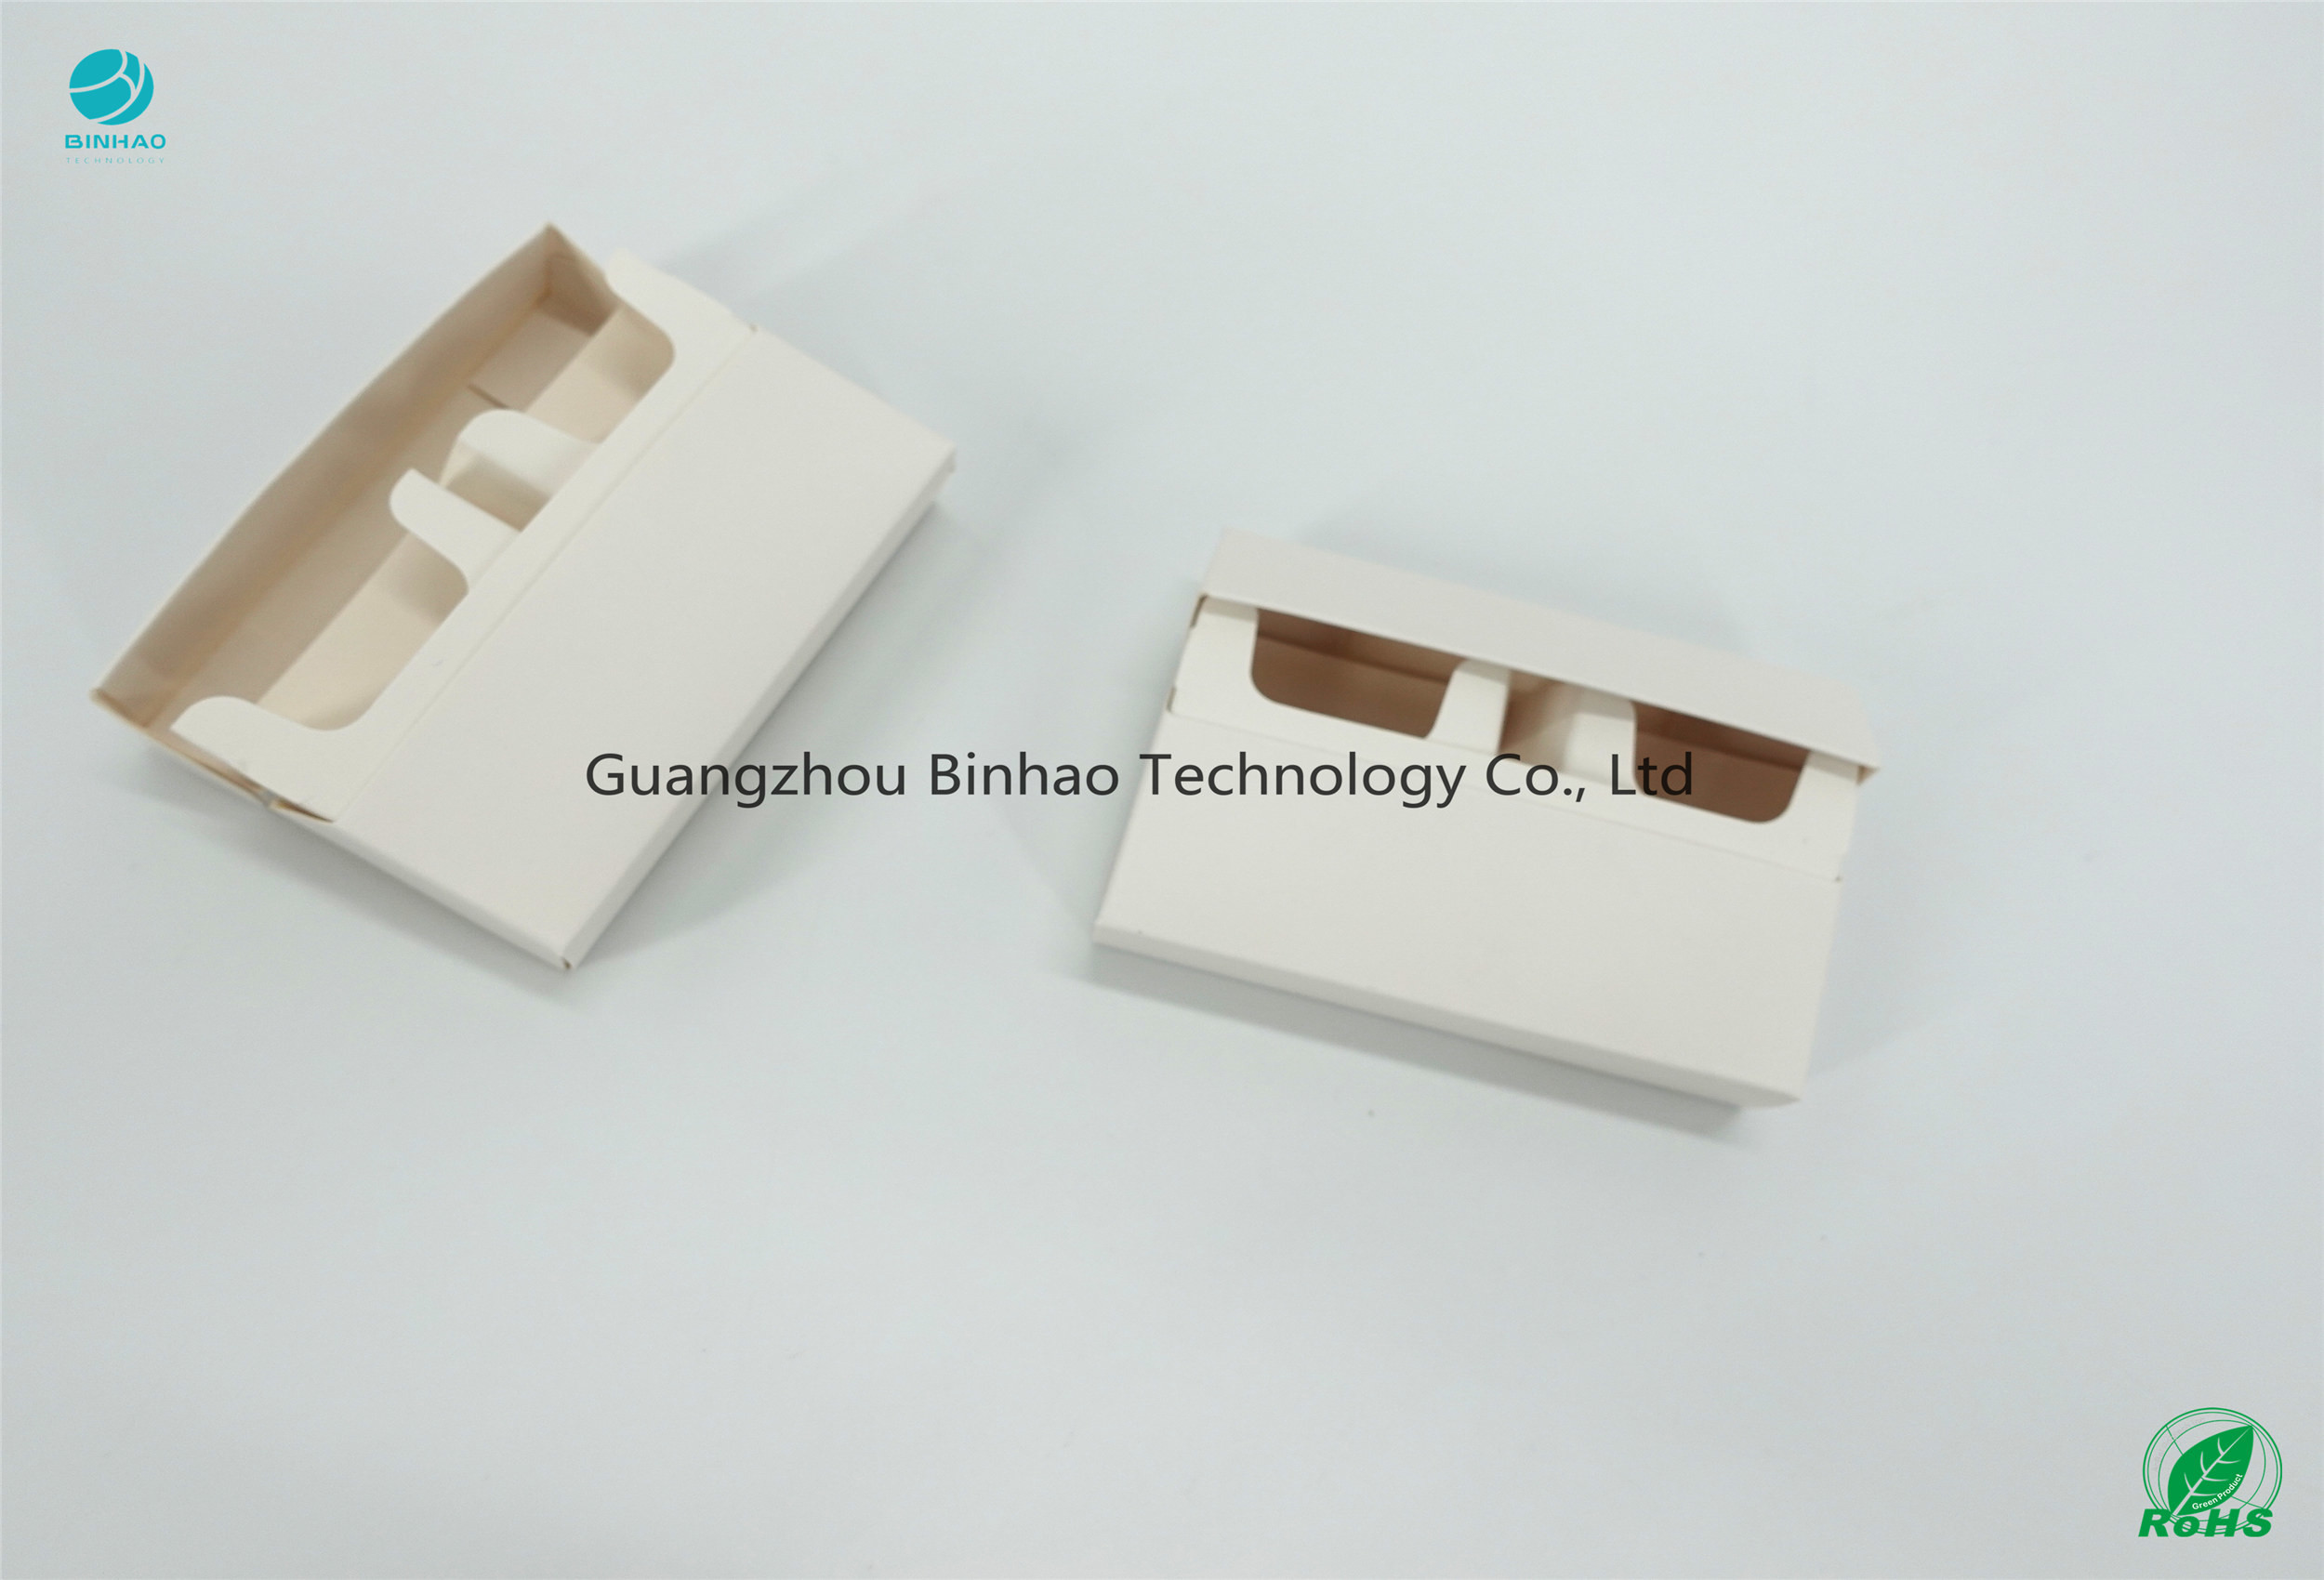 Paperboard складных материалов пакета E-сигареты коробки HNB раковины сигареты белый